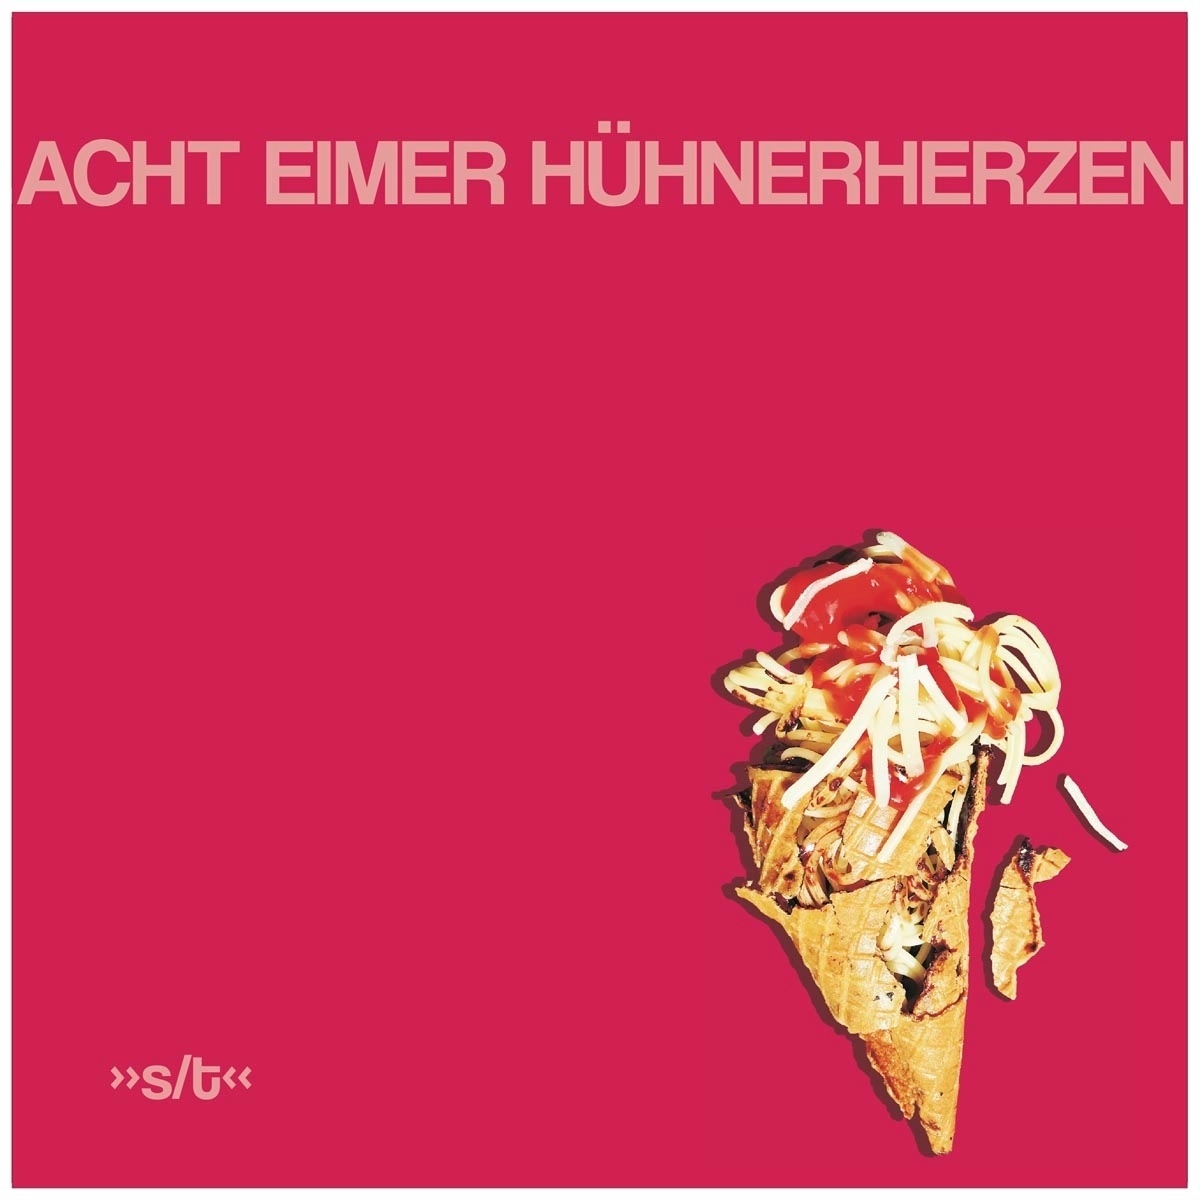 Acht Eimer Hühnerherzen - Acht Eimer Hühnerherzen. (CD)